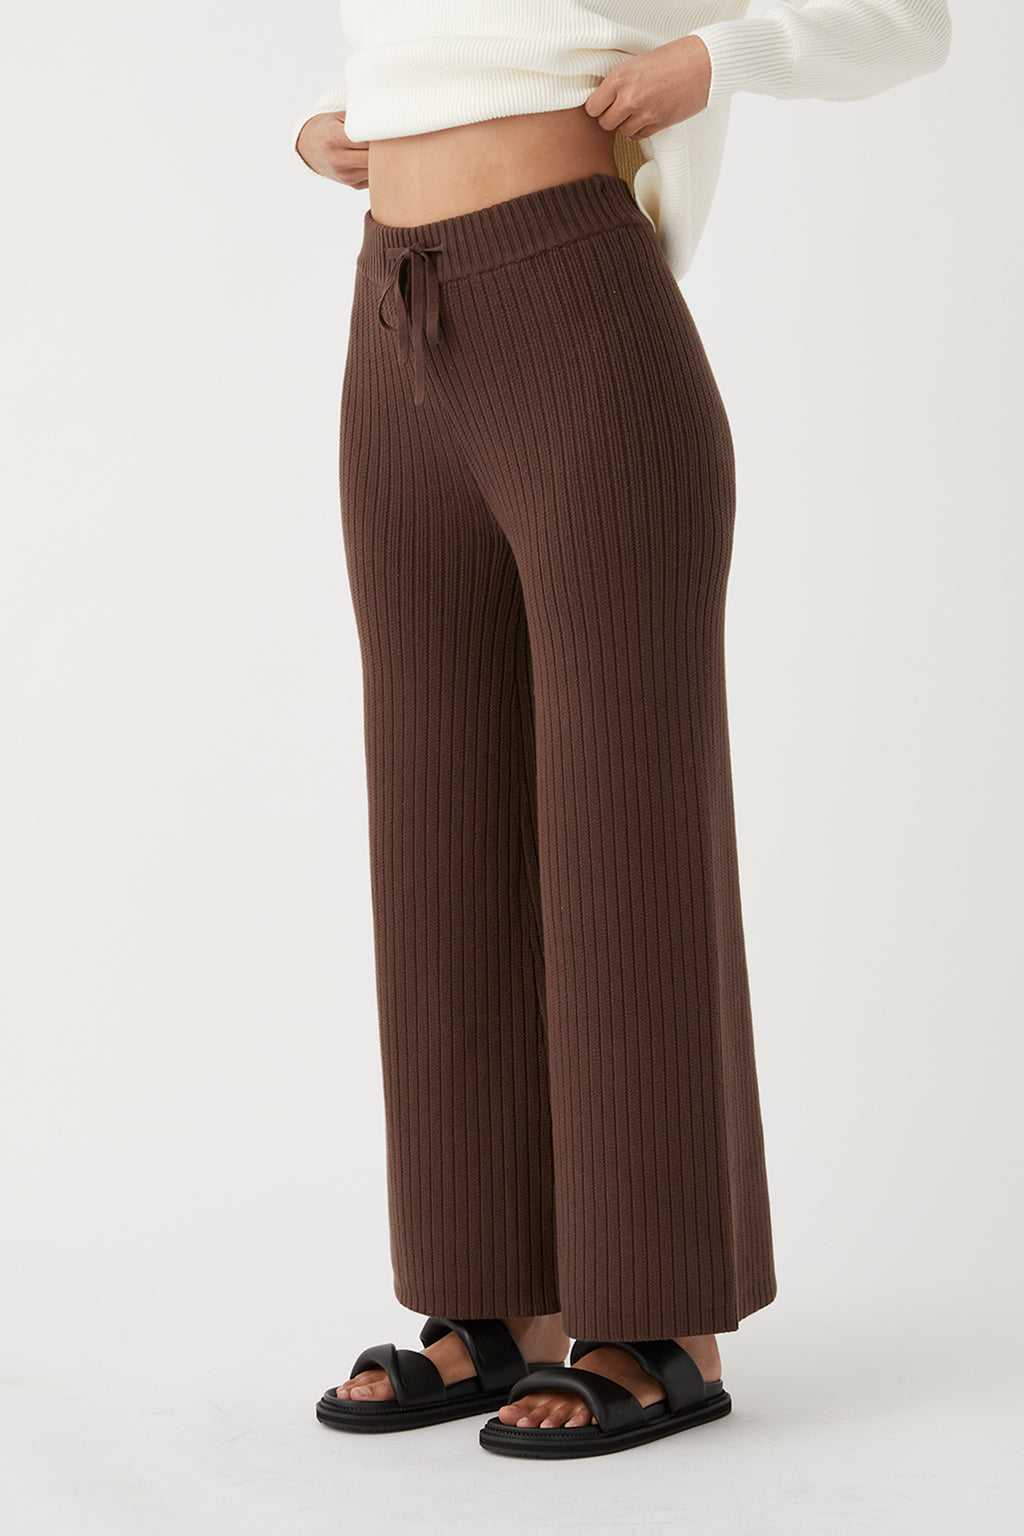 Vera Organic Knit Pants - Chocolate